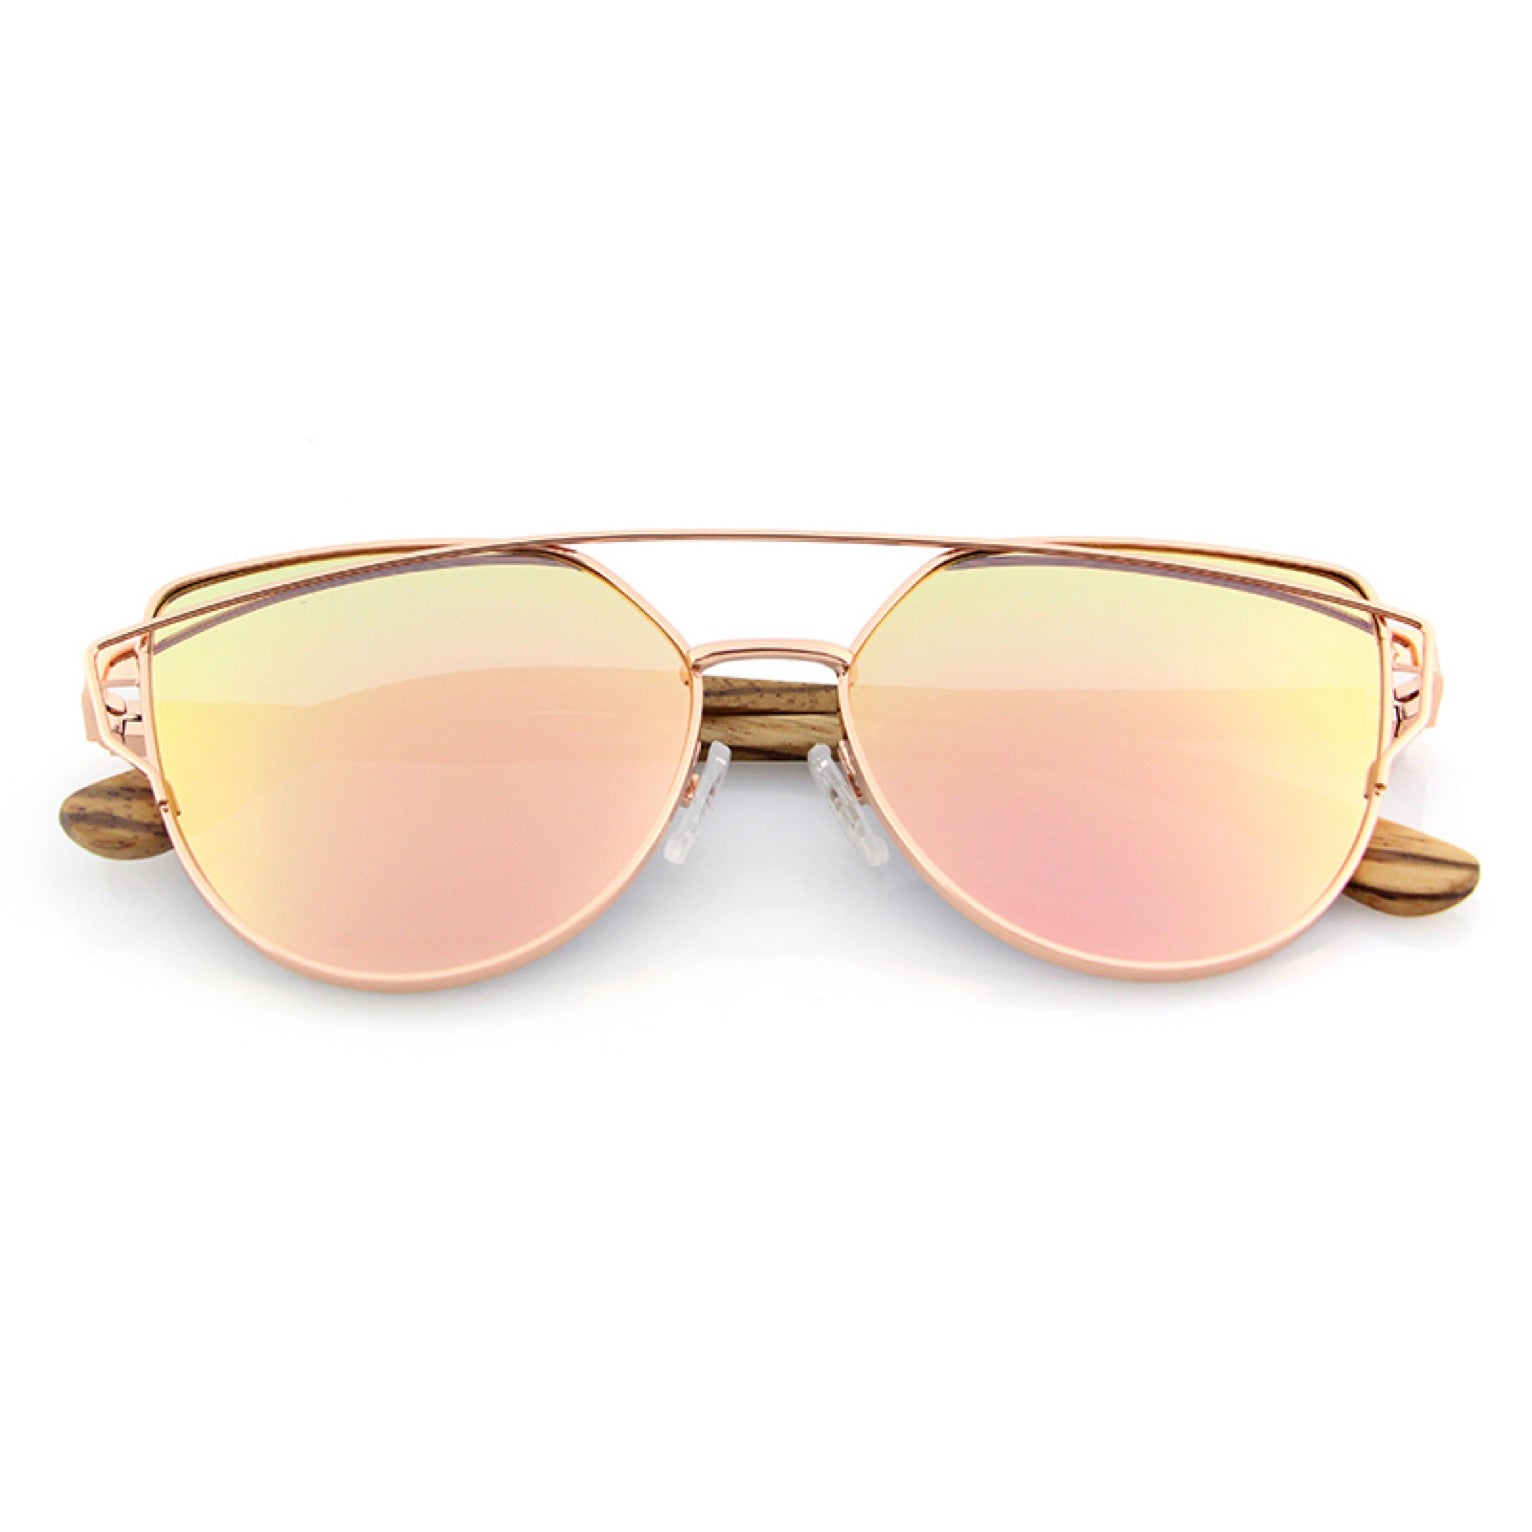 mirrored rose gold cat eye sunglasses